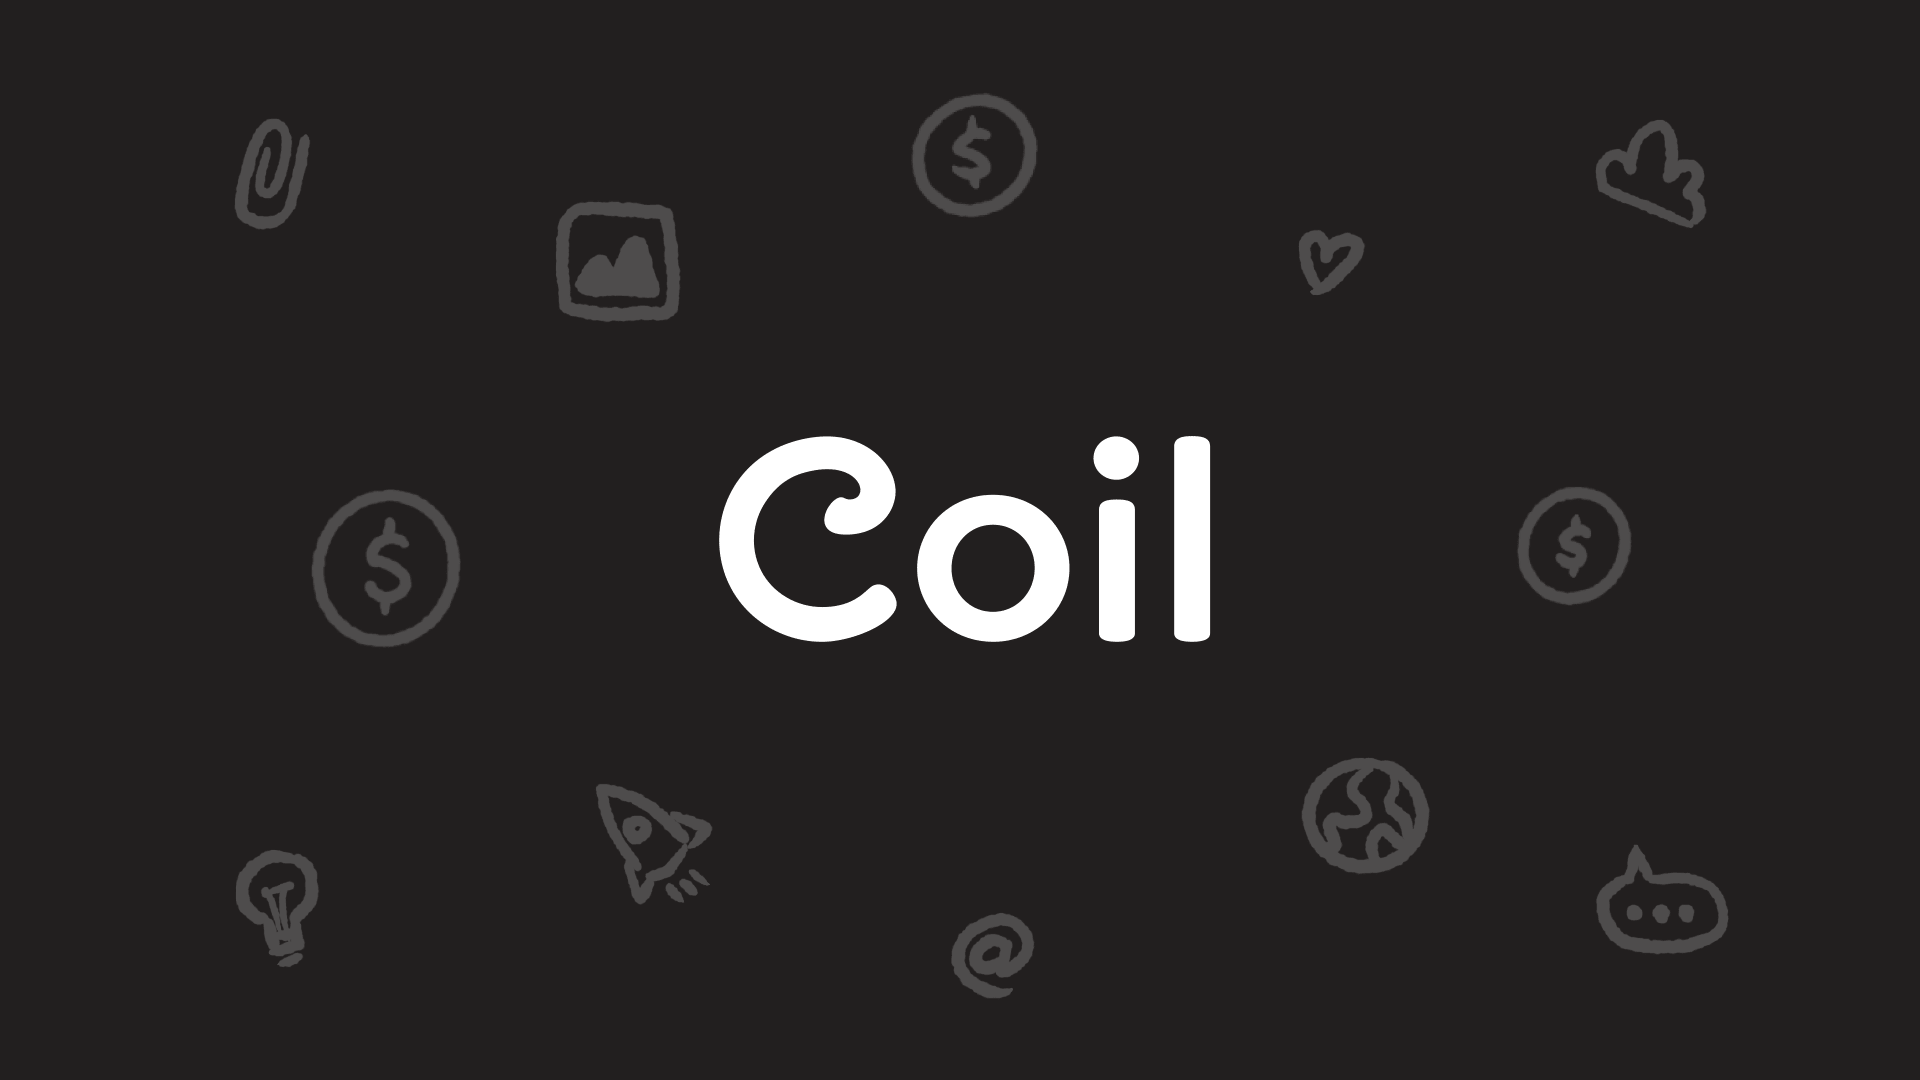 The Coil logo